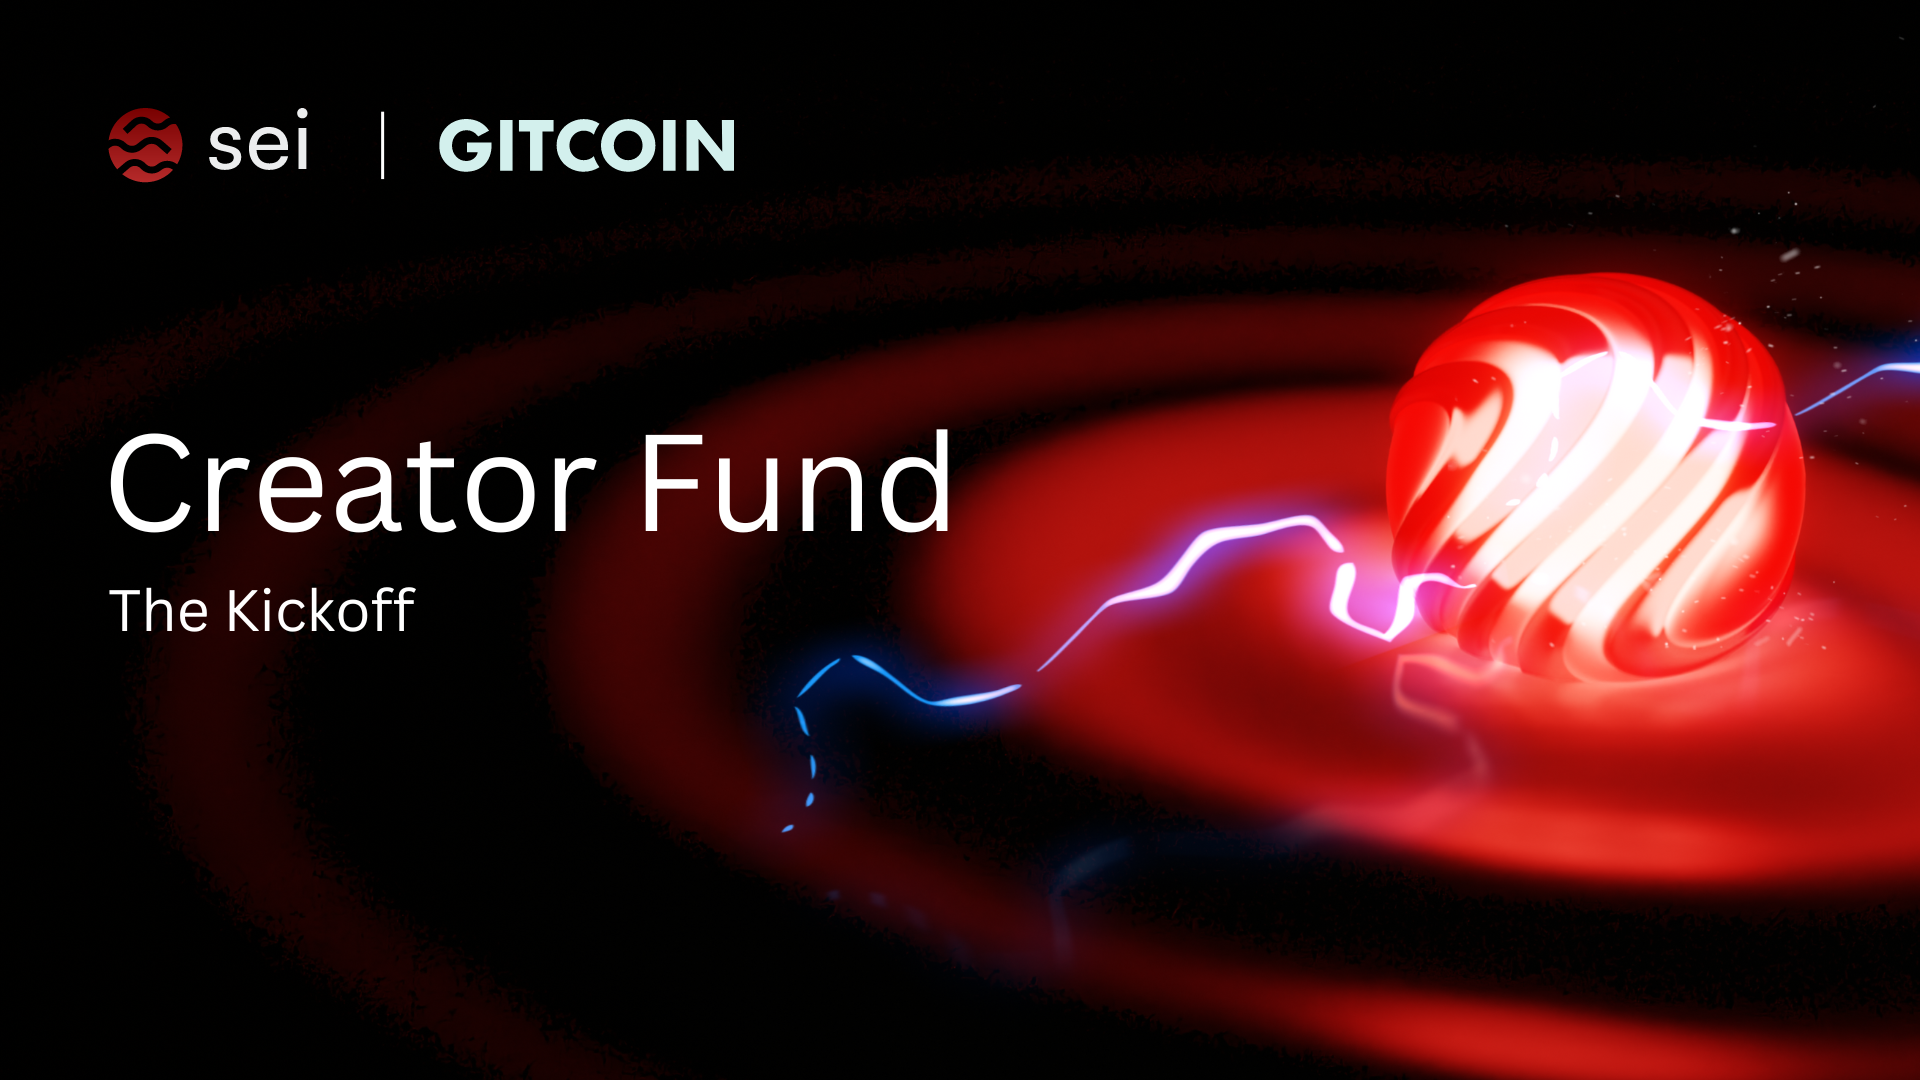 Launching the Sei x Gitcoin Creator Fund